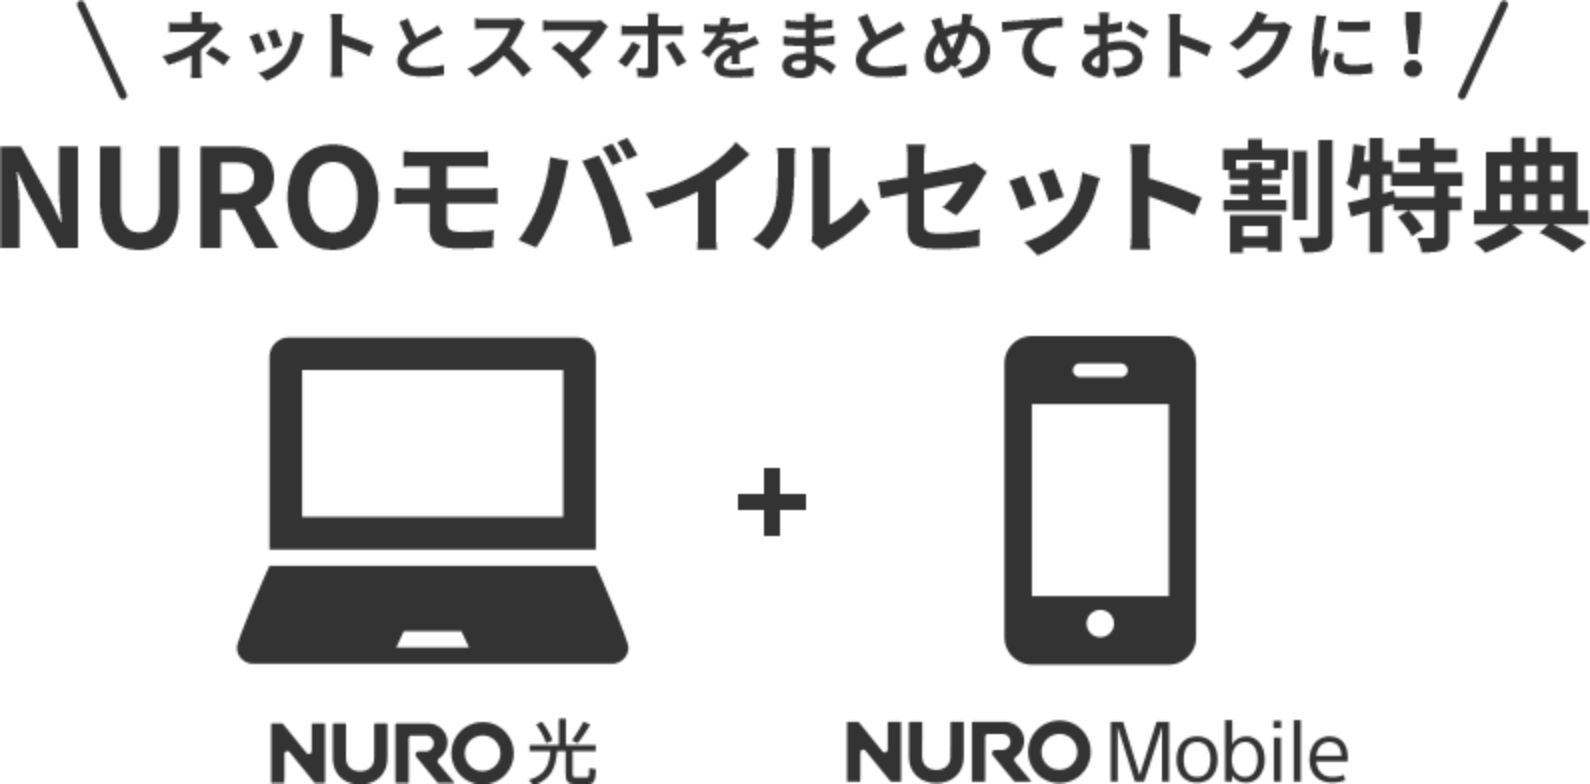 NUROモバイルセット割特典